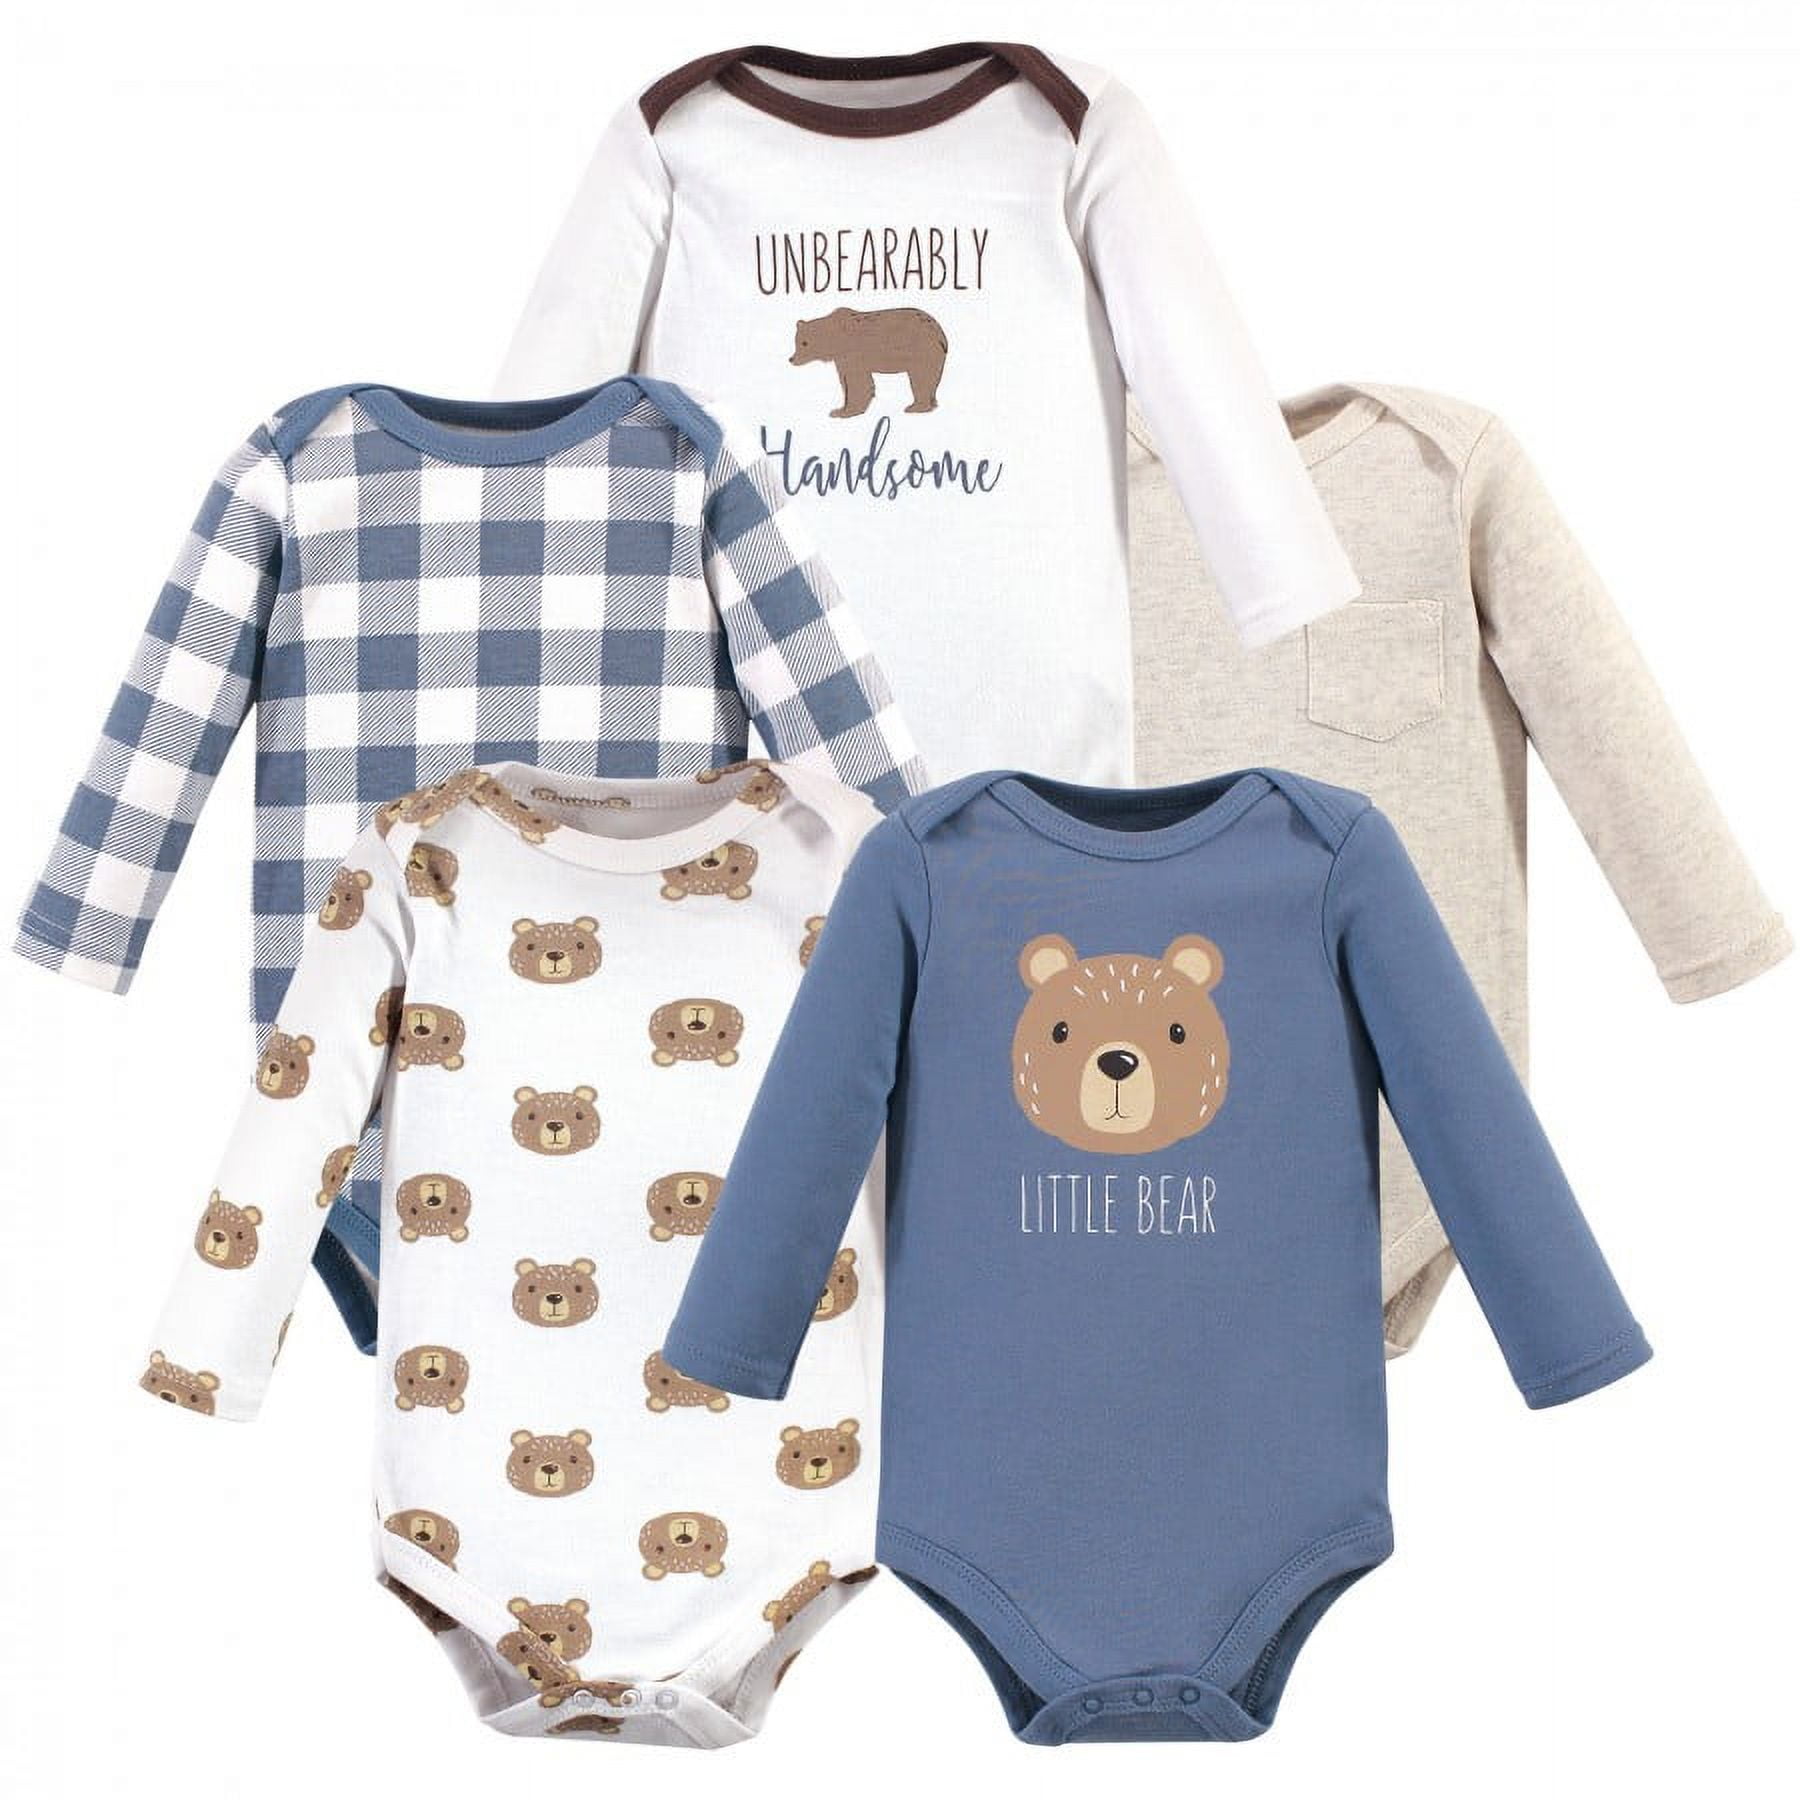 Hudson Baby Infant Boy Cotton Long-Sleeve Bodysuits 5pk, Little Bear, 12-18 Months - Walmart.com